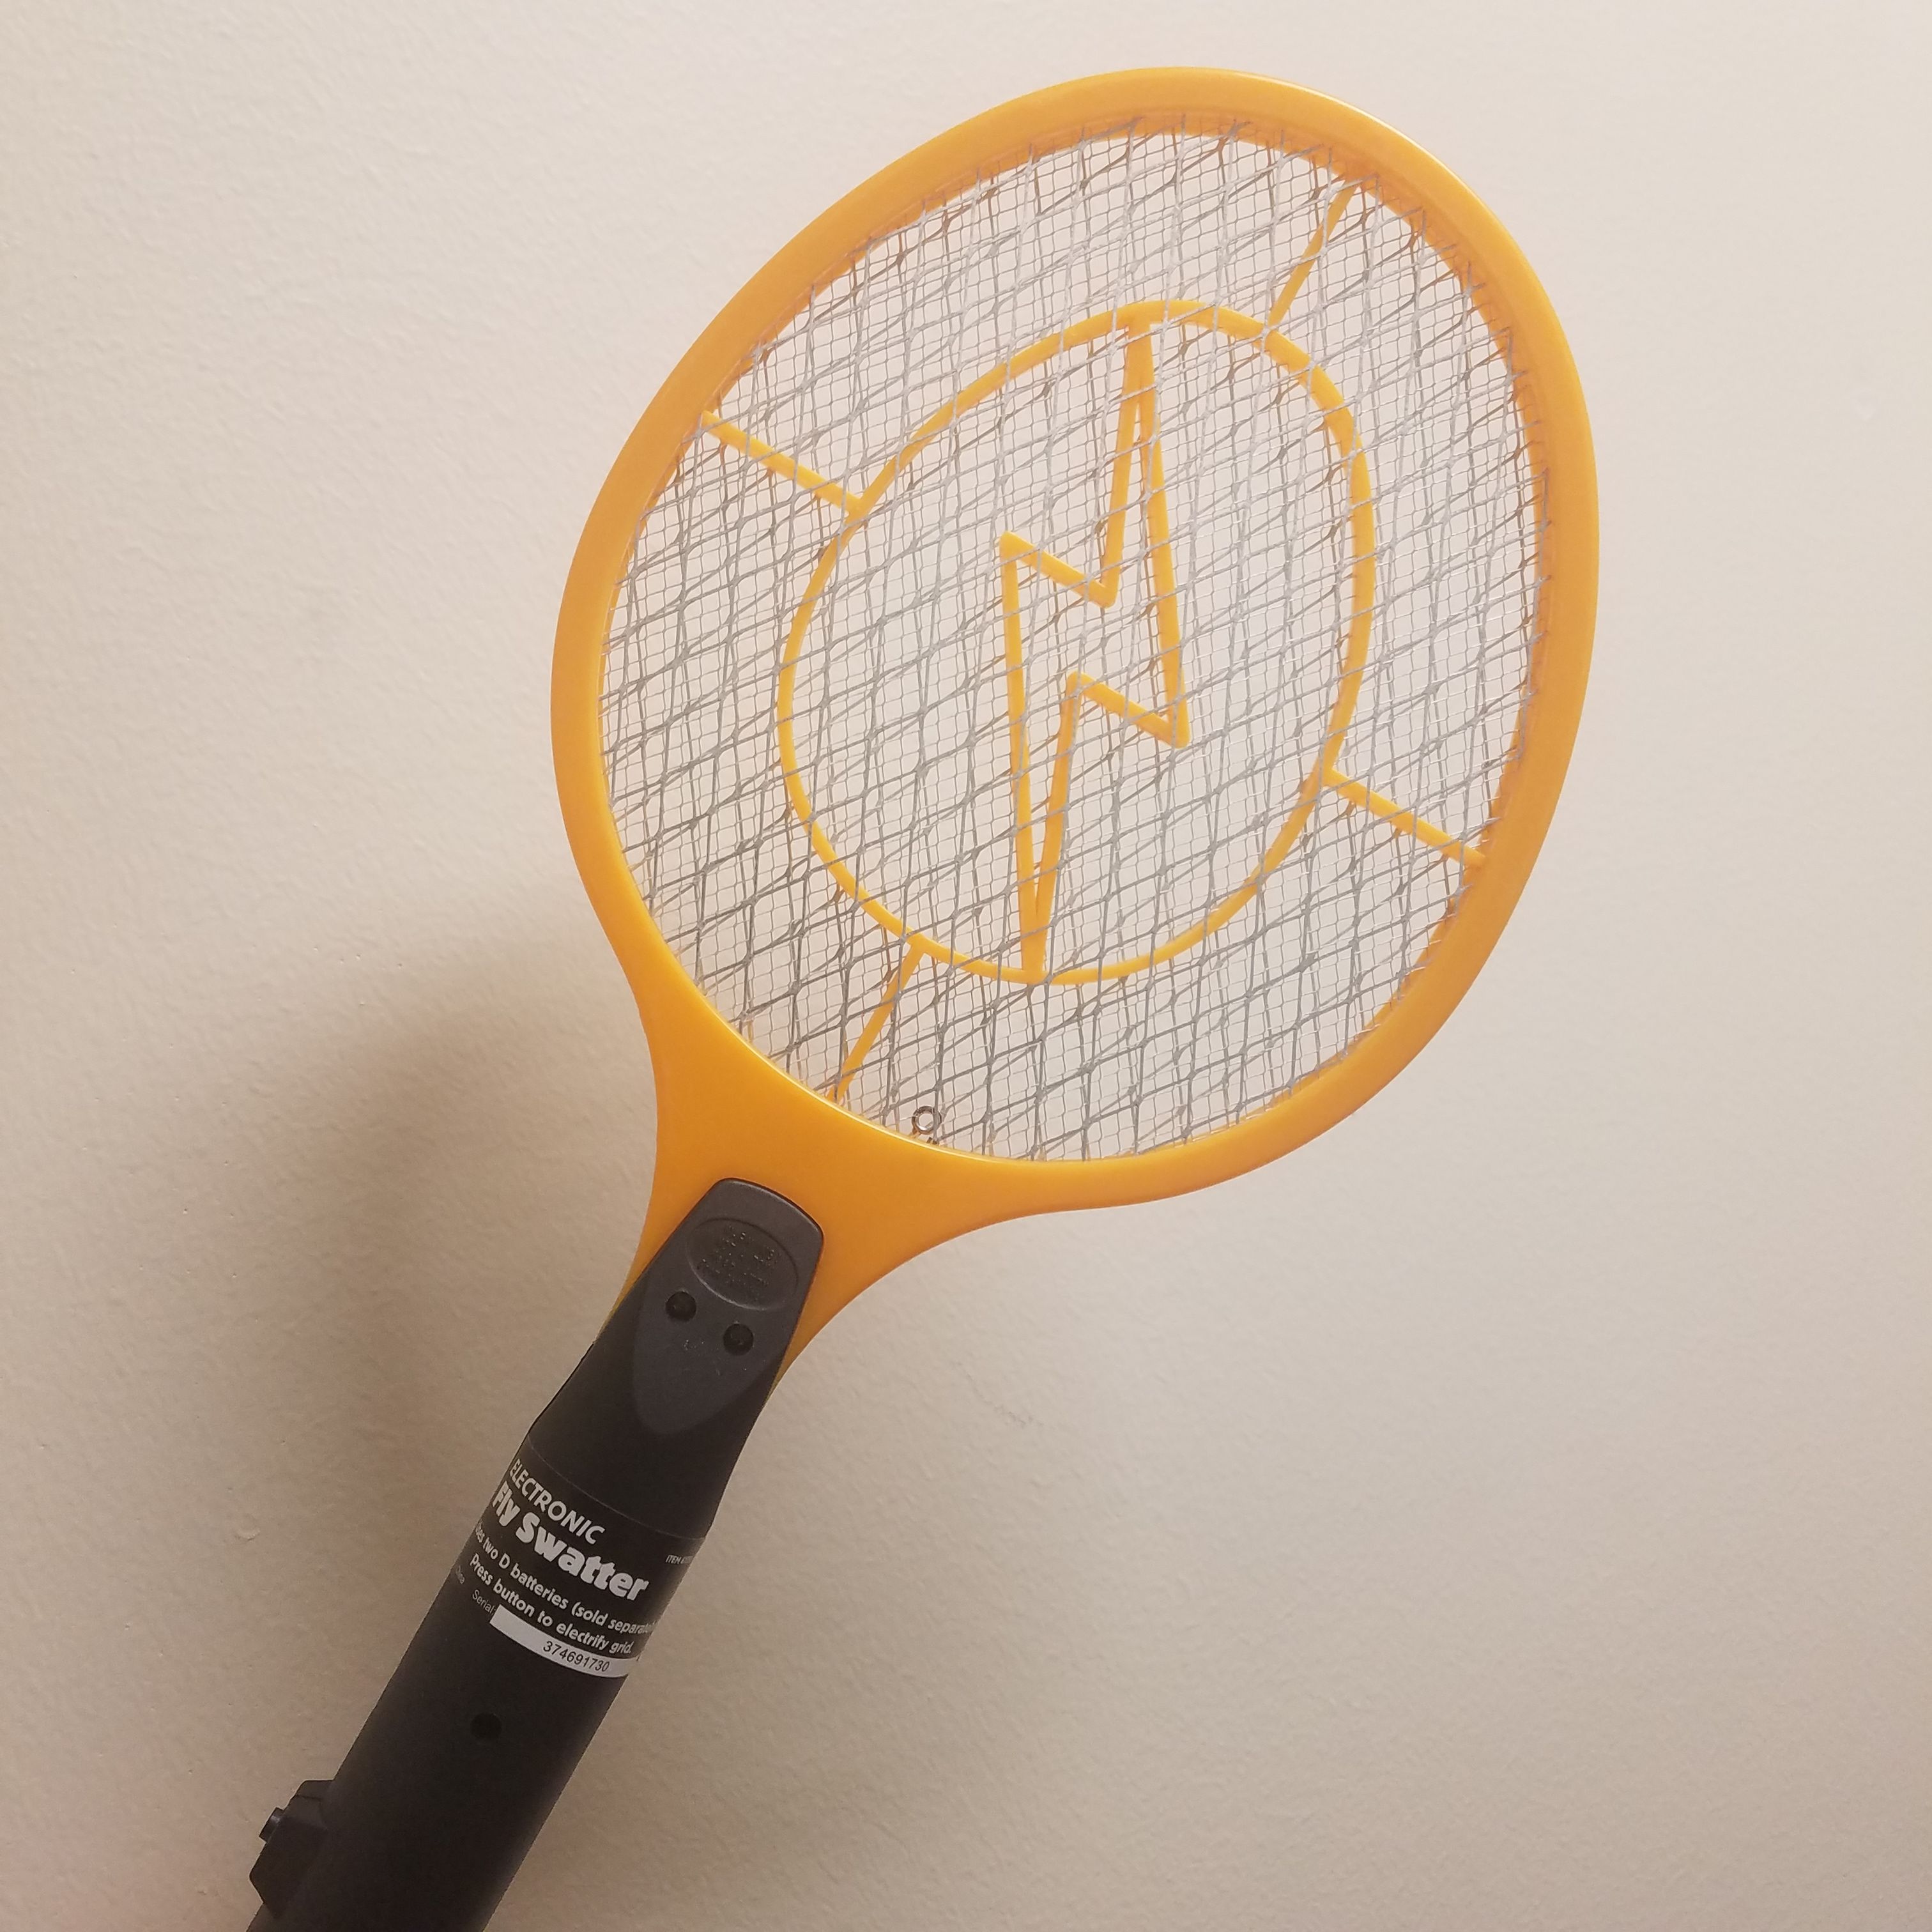 huge fly swatter